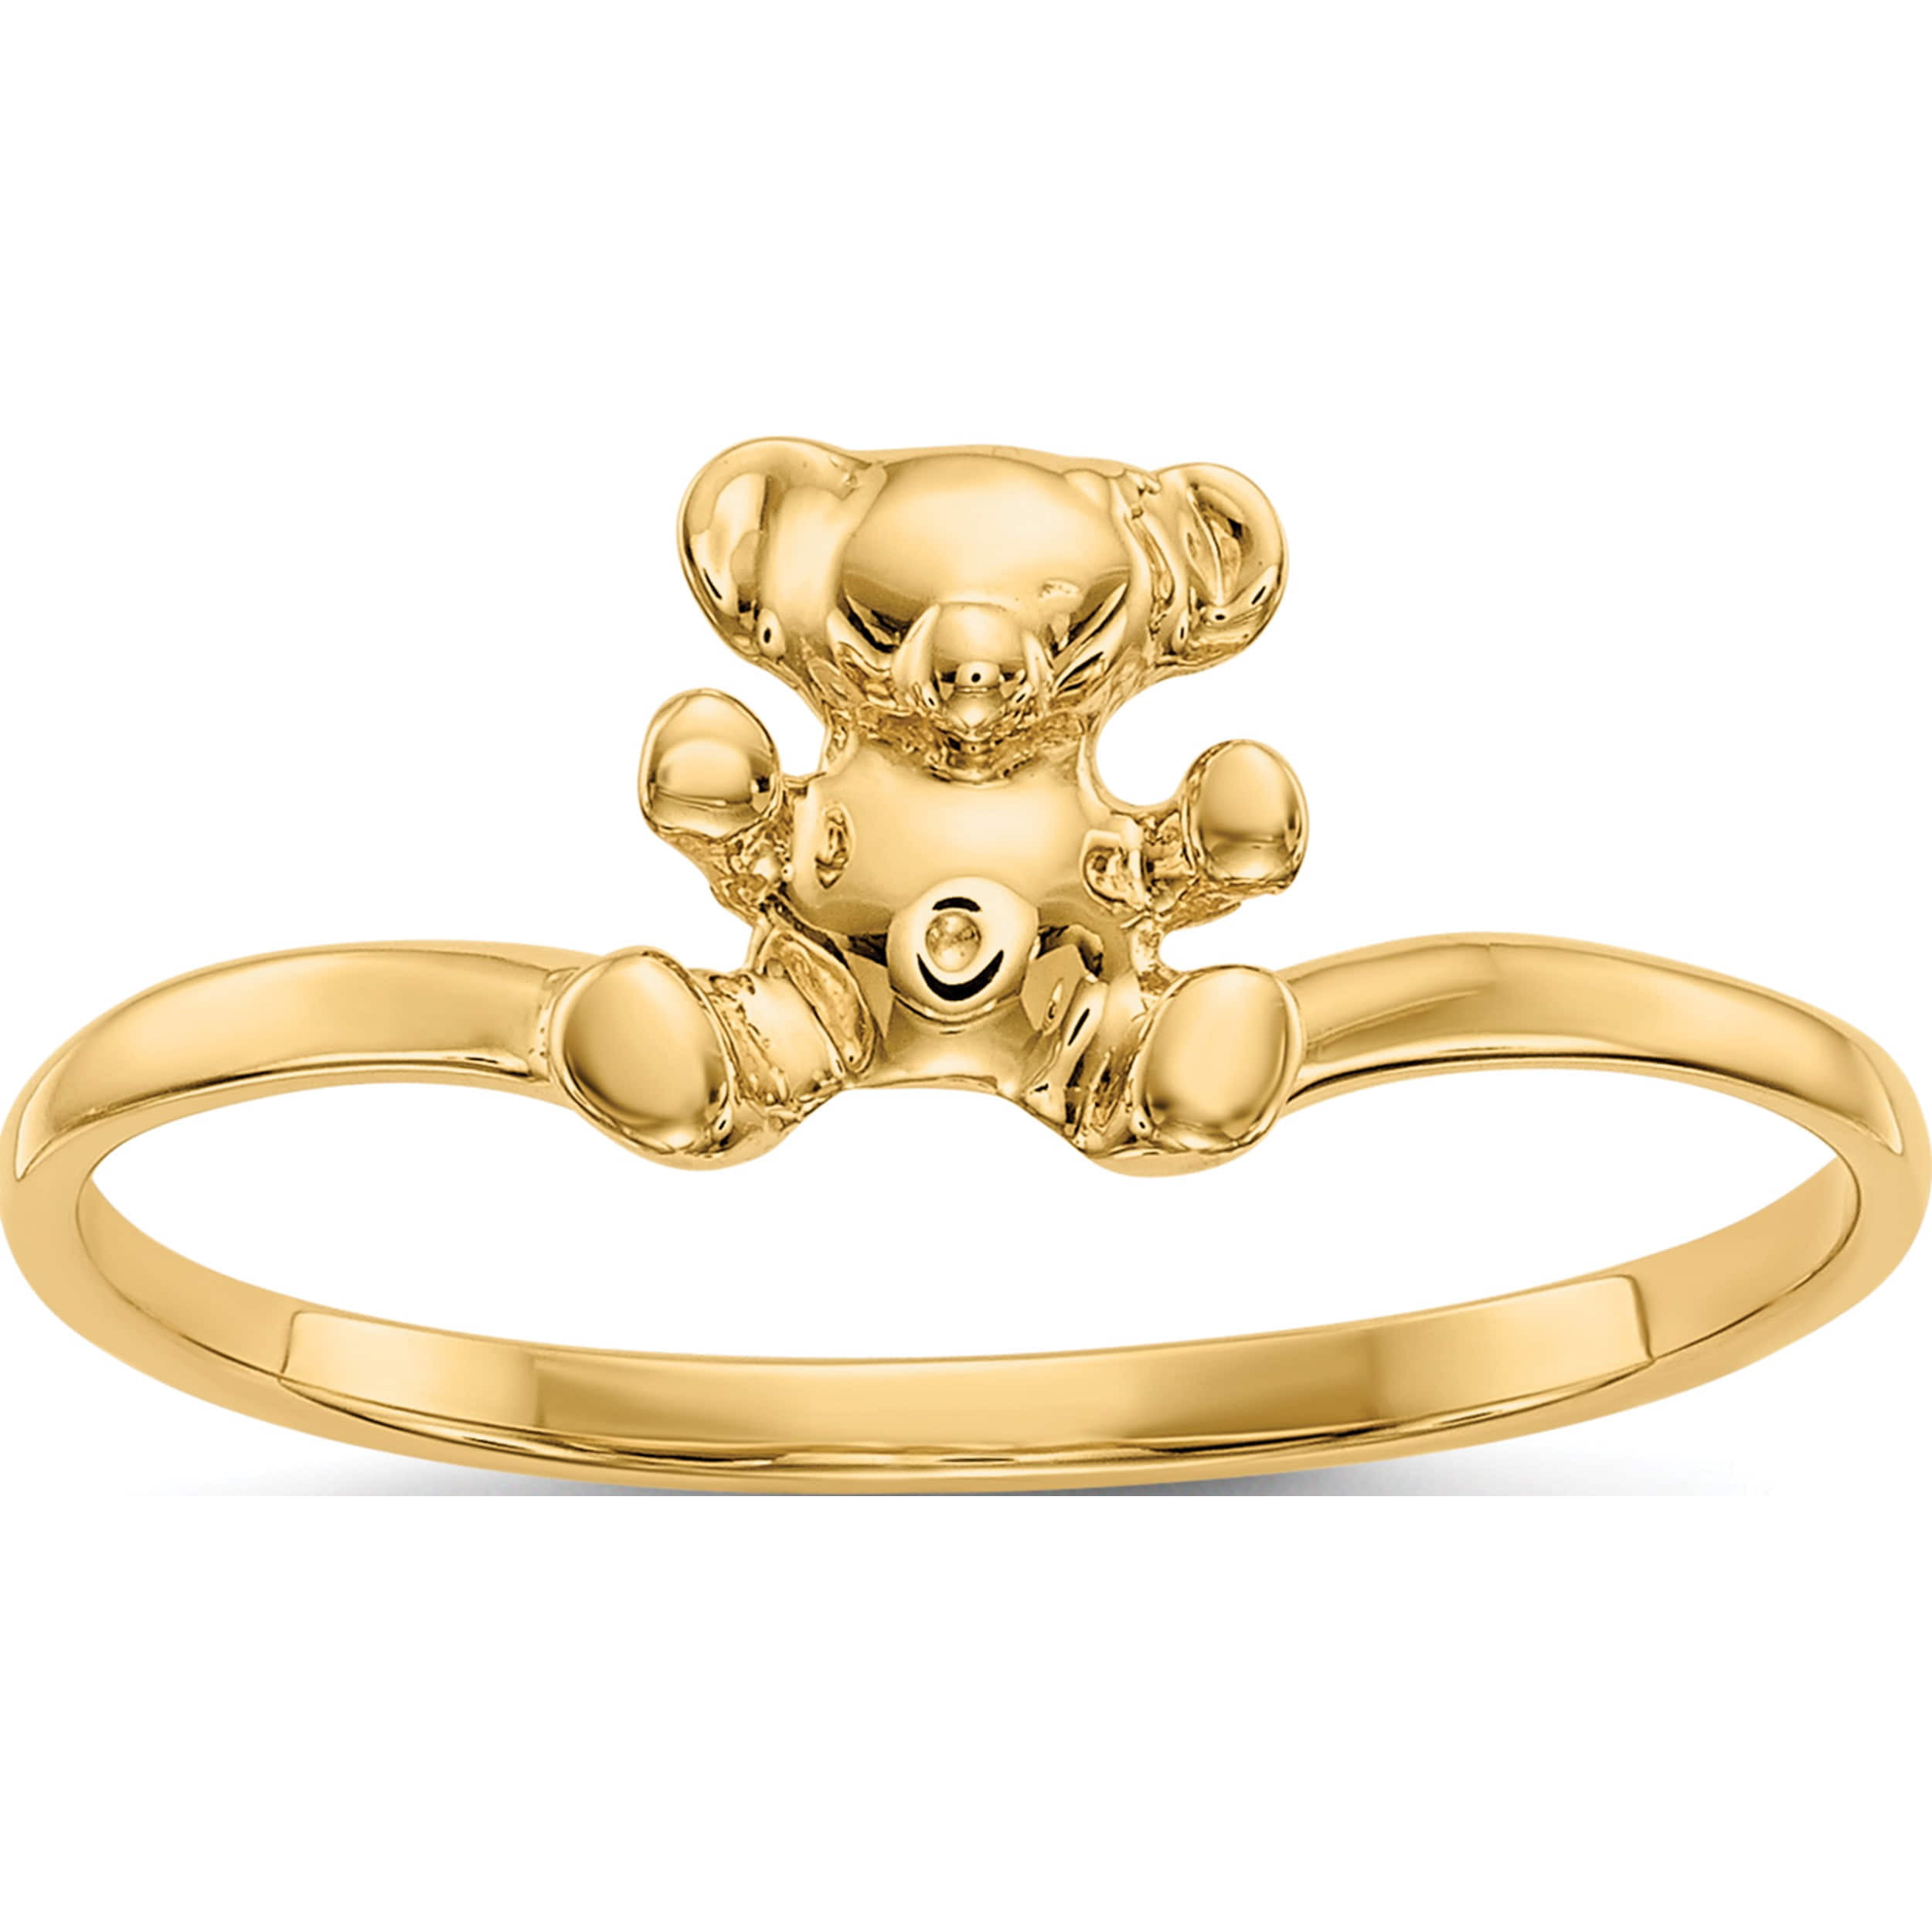 Buy Children's 14K Rose Gold Diamond Teddy Bear Ring, Pinky or Midi Ring,  Little Girls, Kids Animal Jewelry Online in India - Etsy